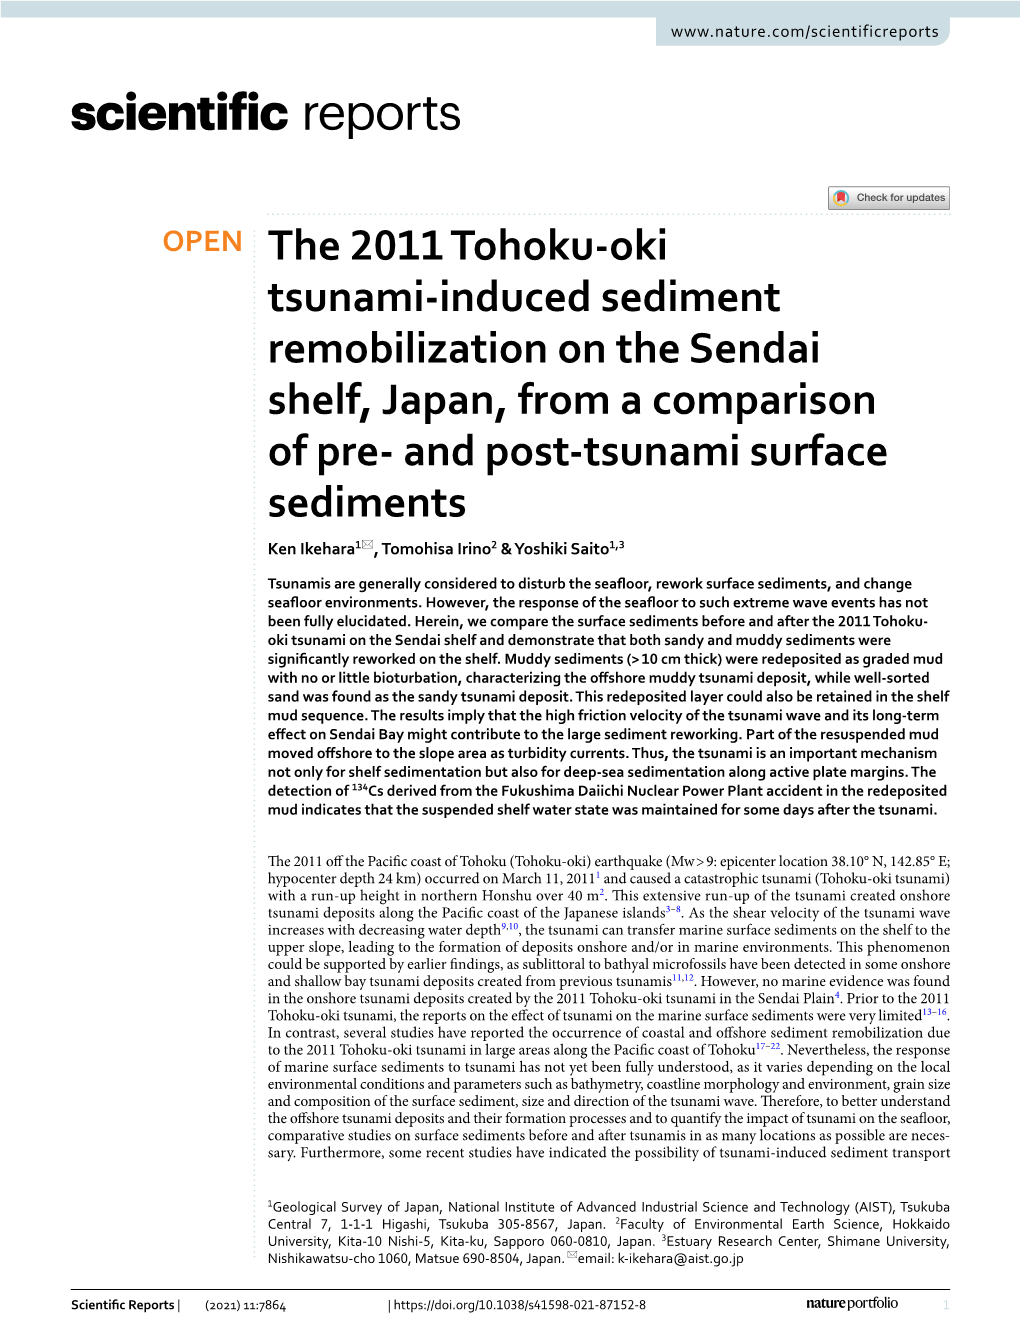 The 2011 Tohoku-Oki Tsunami-Induced Sediment